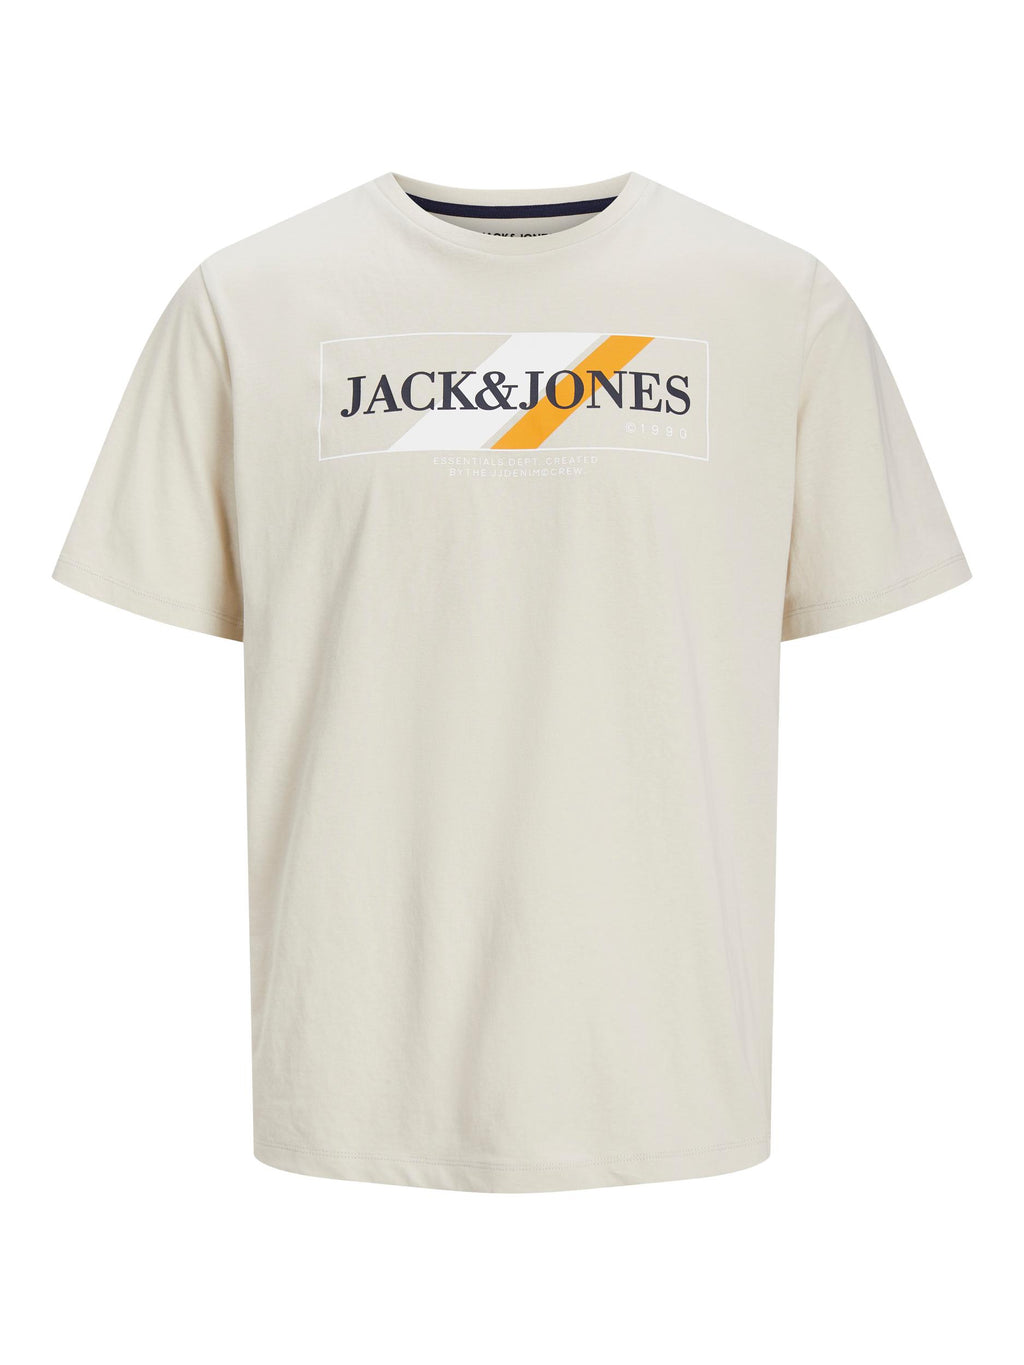 Jack & Jones Loof Tee Moonbeam (Stone) - Raw Menswear